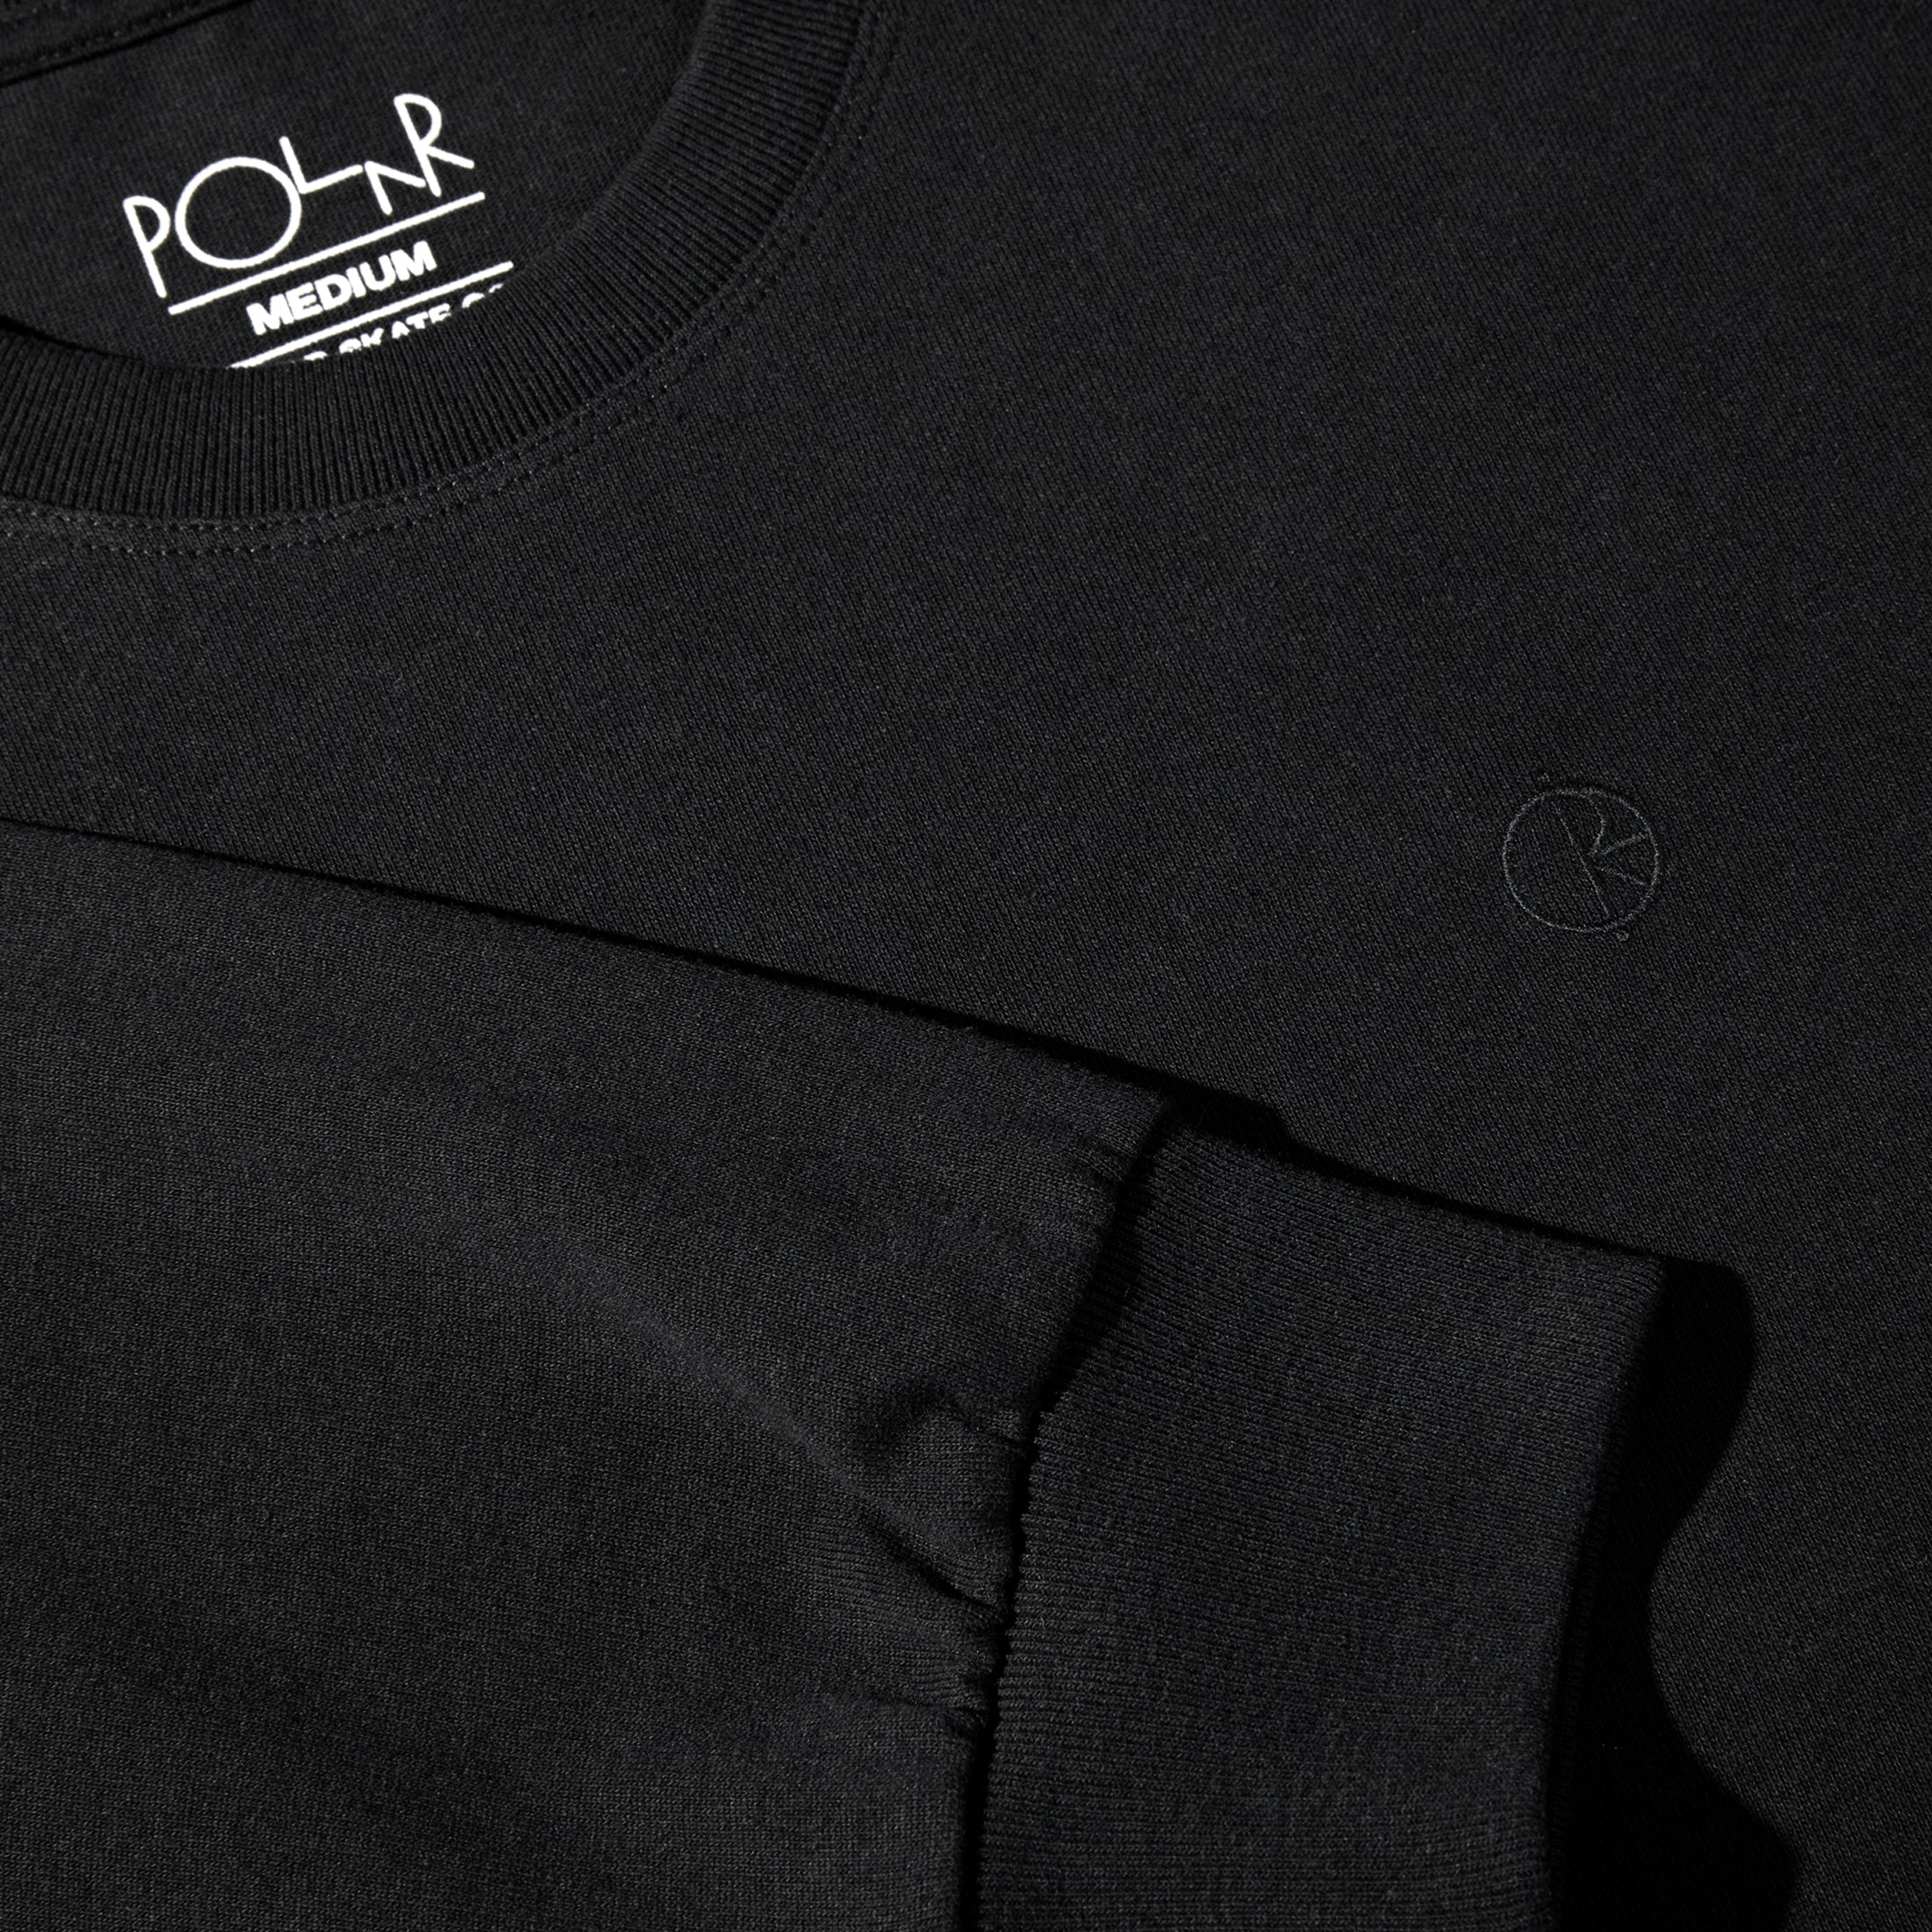 Polar Team Long Sleeve T-Shirt Black